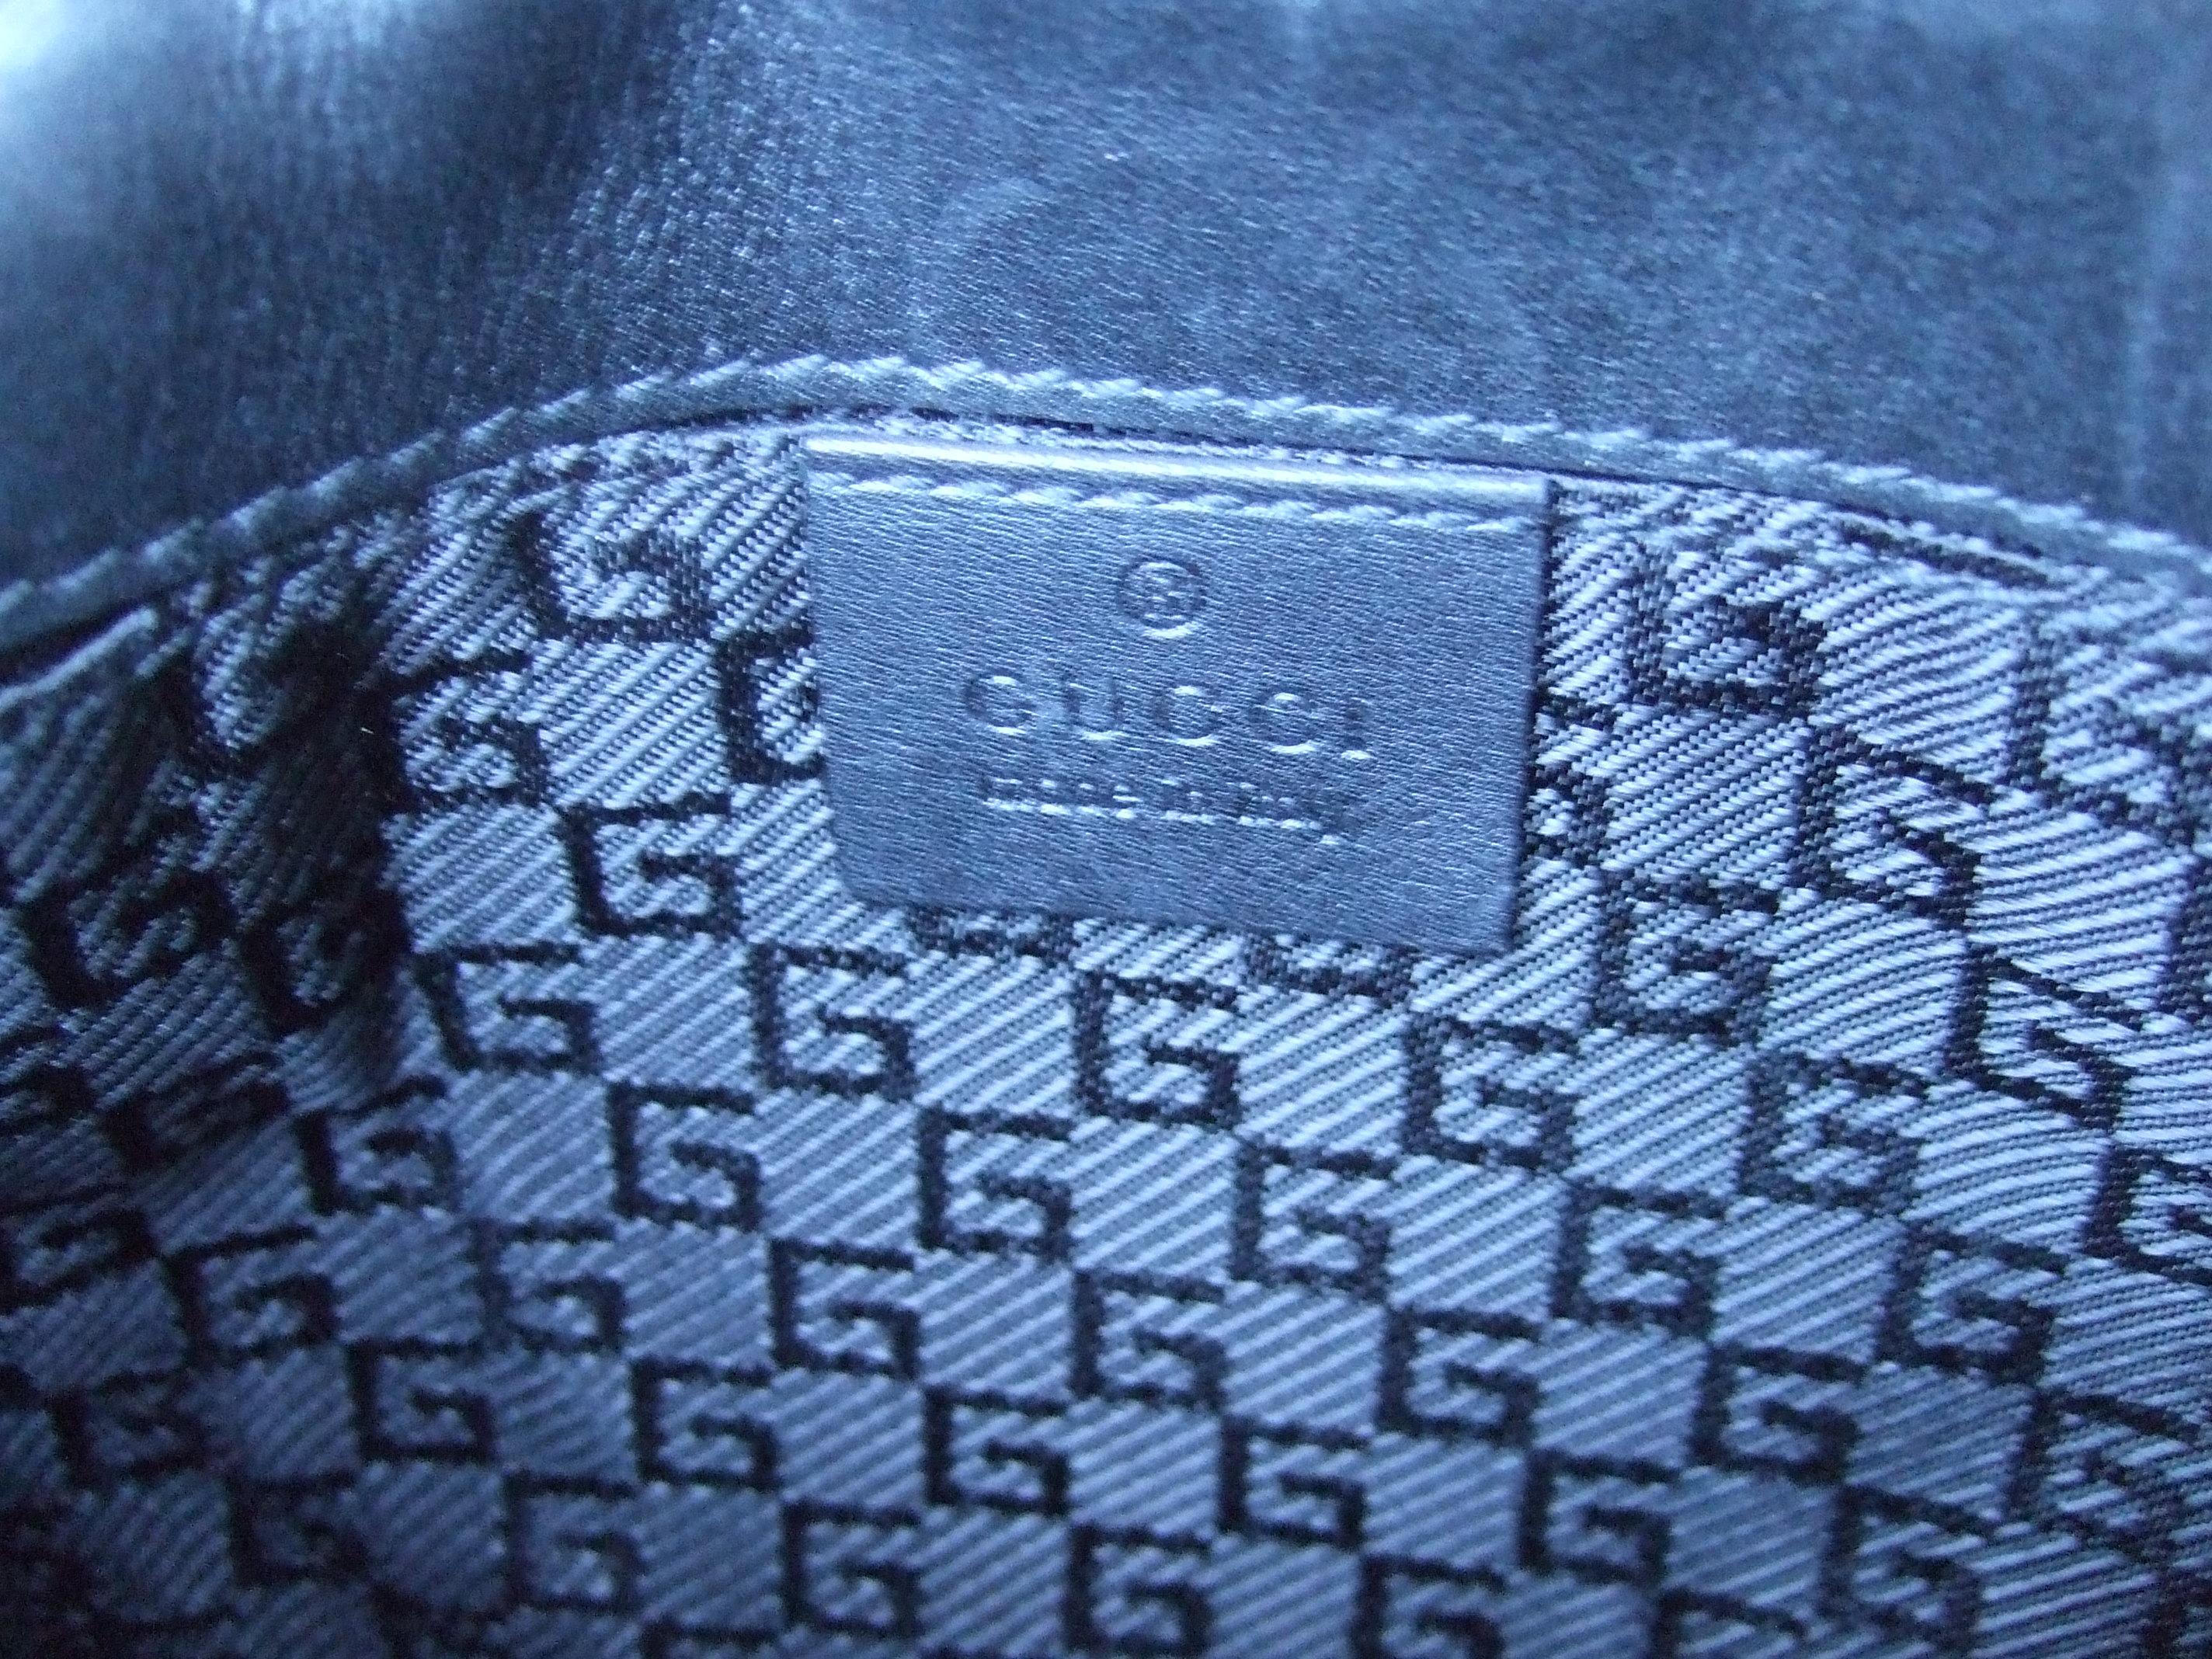 Gucci Italy Rare Black Suede Tiger Emblem Handbag Tom Ford Design c 1990s  For Sale 12